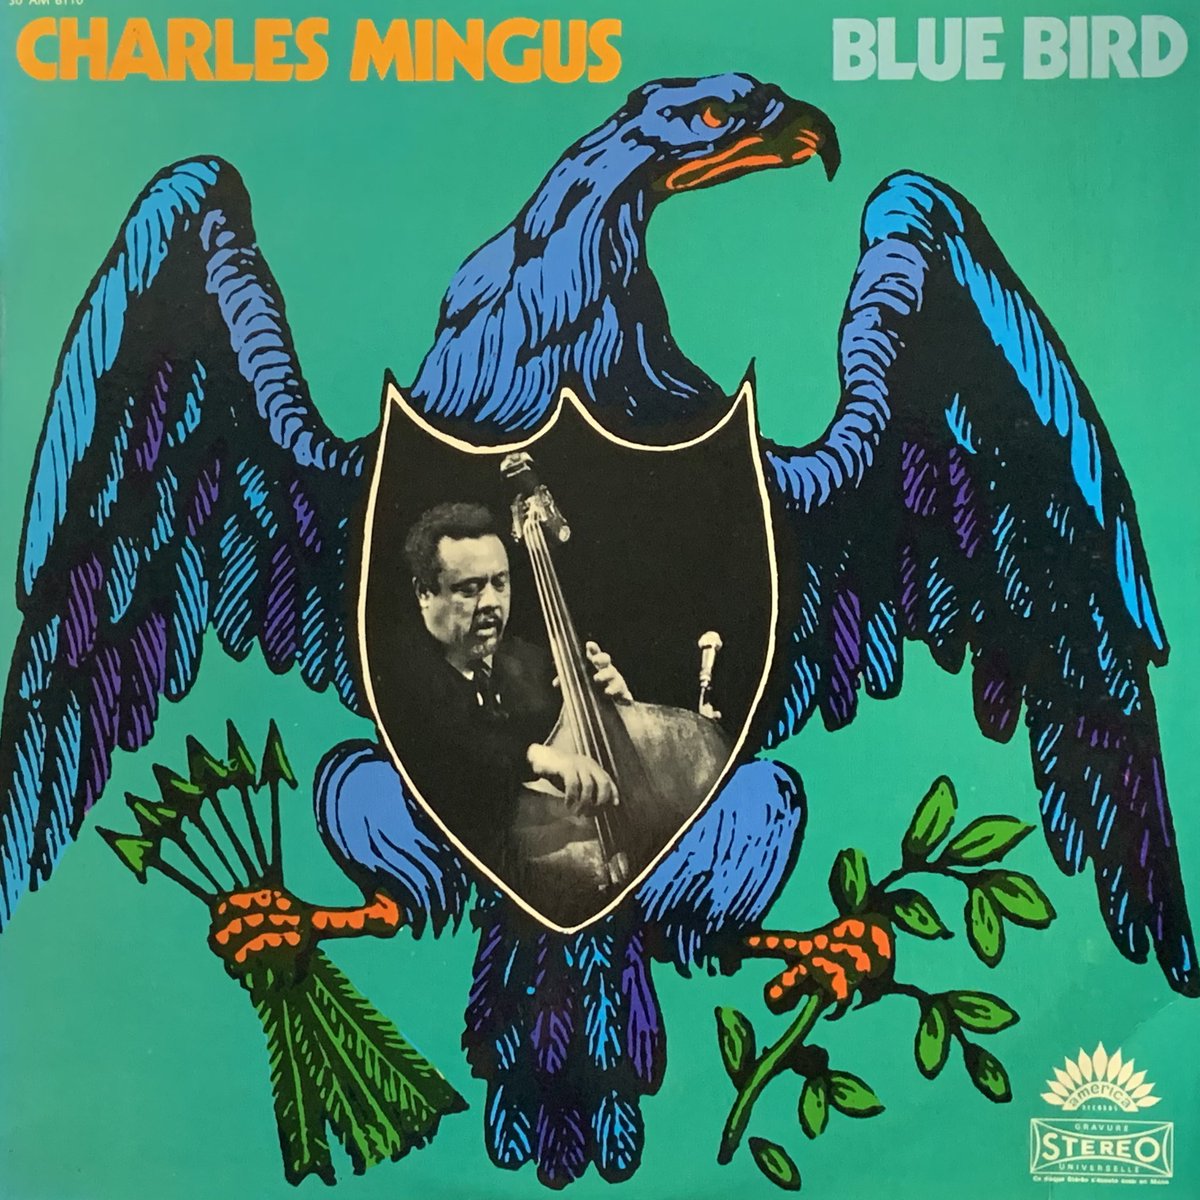 BLUE BIRD CHARLES MINGUS